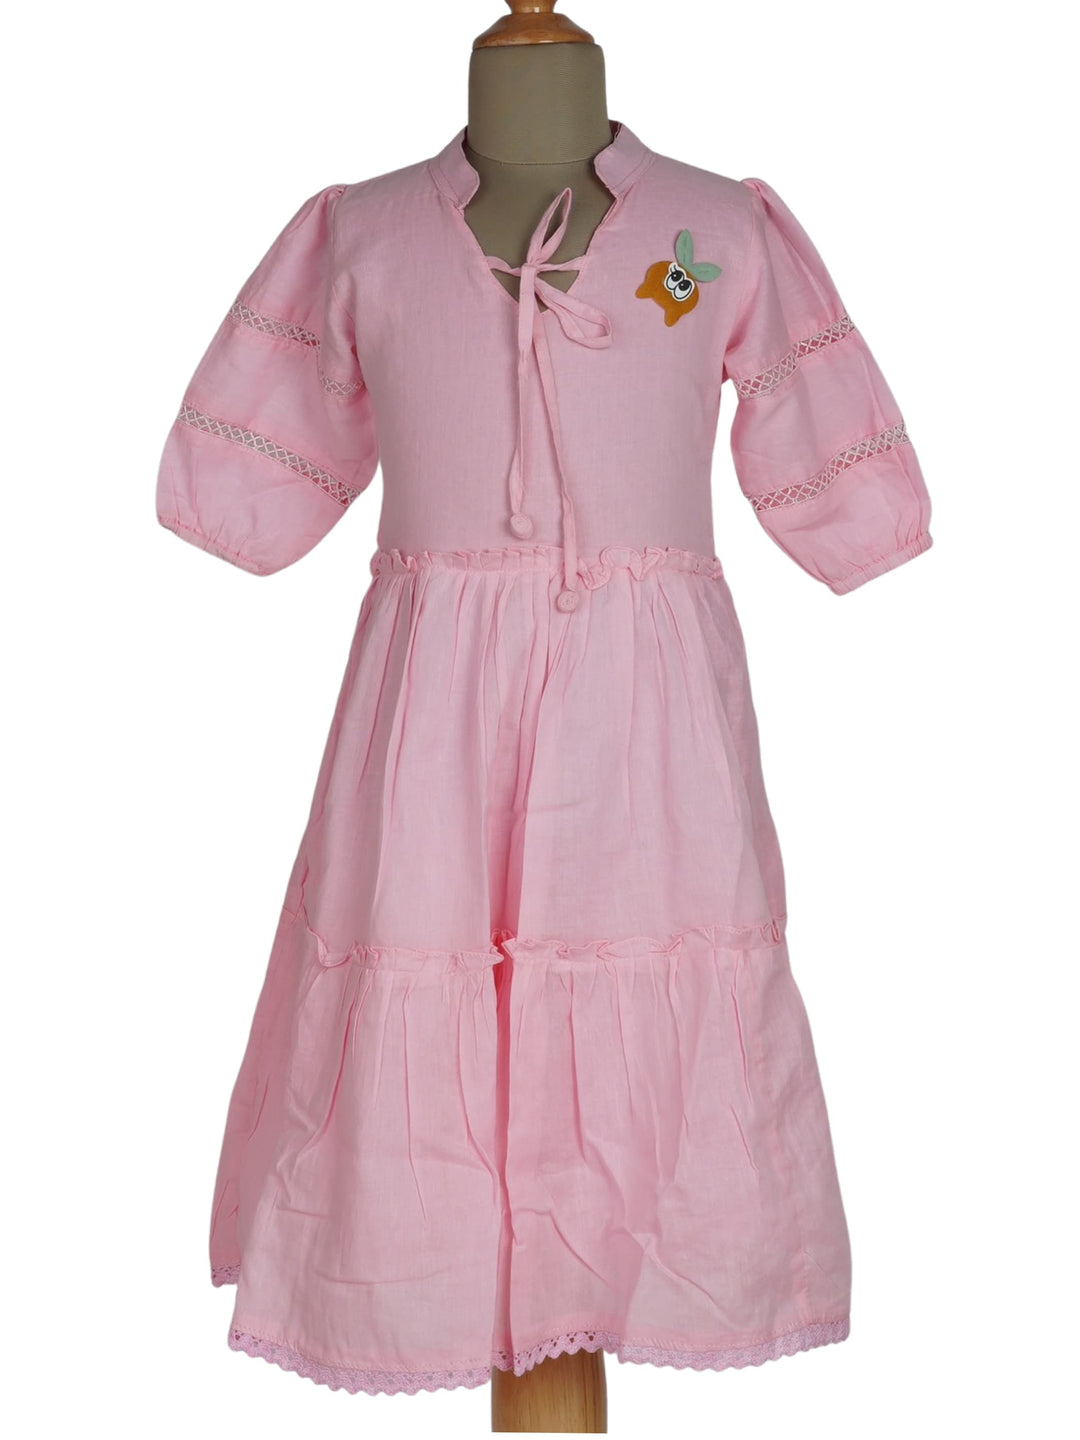 The Nesavu Frocks & Dresses Monochrome Cotton Wear For Girls With Tie-Up Mandarin Collar psr silks Nesavu 24 (5Y-6Y) / Pink GFC594A